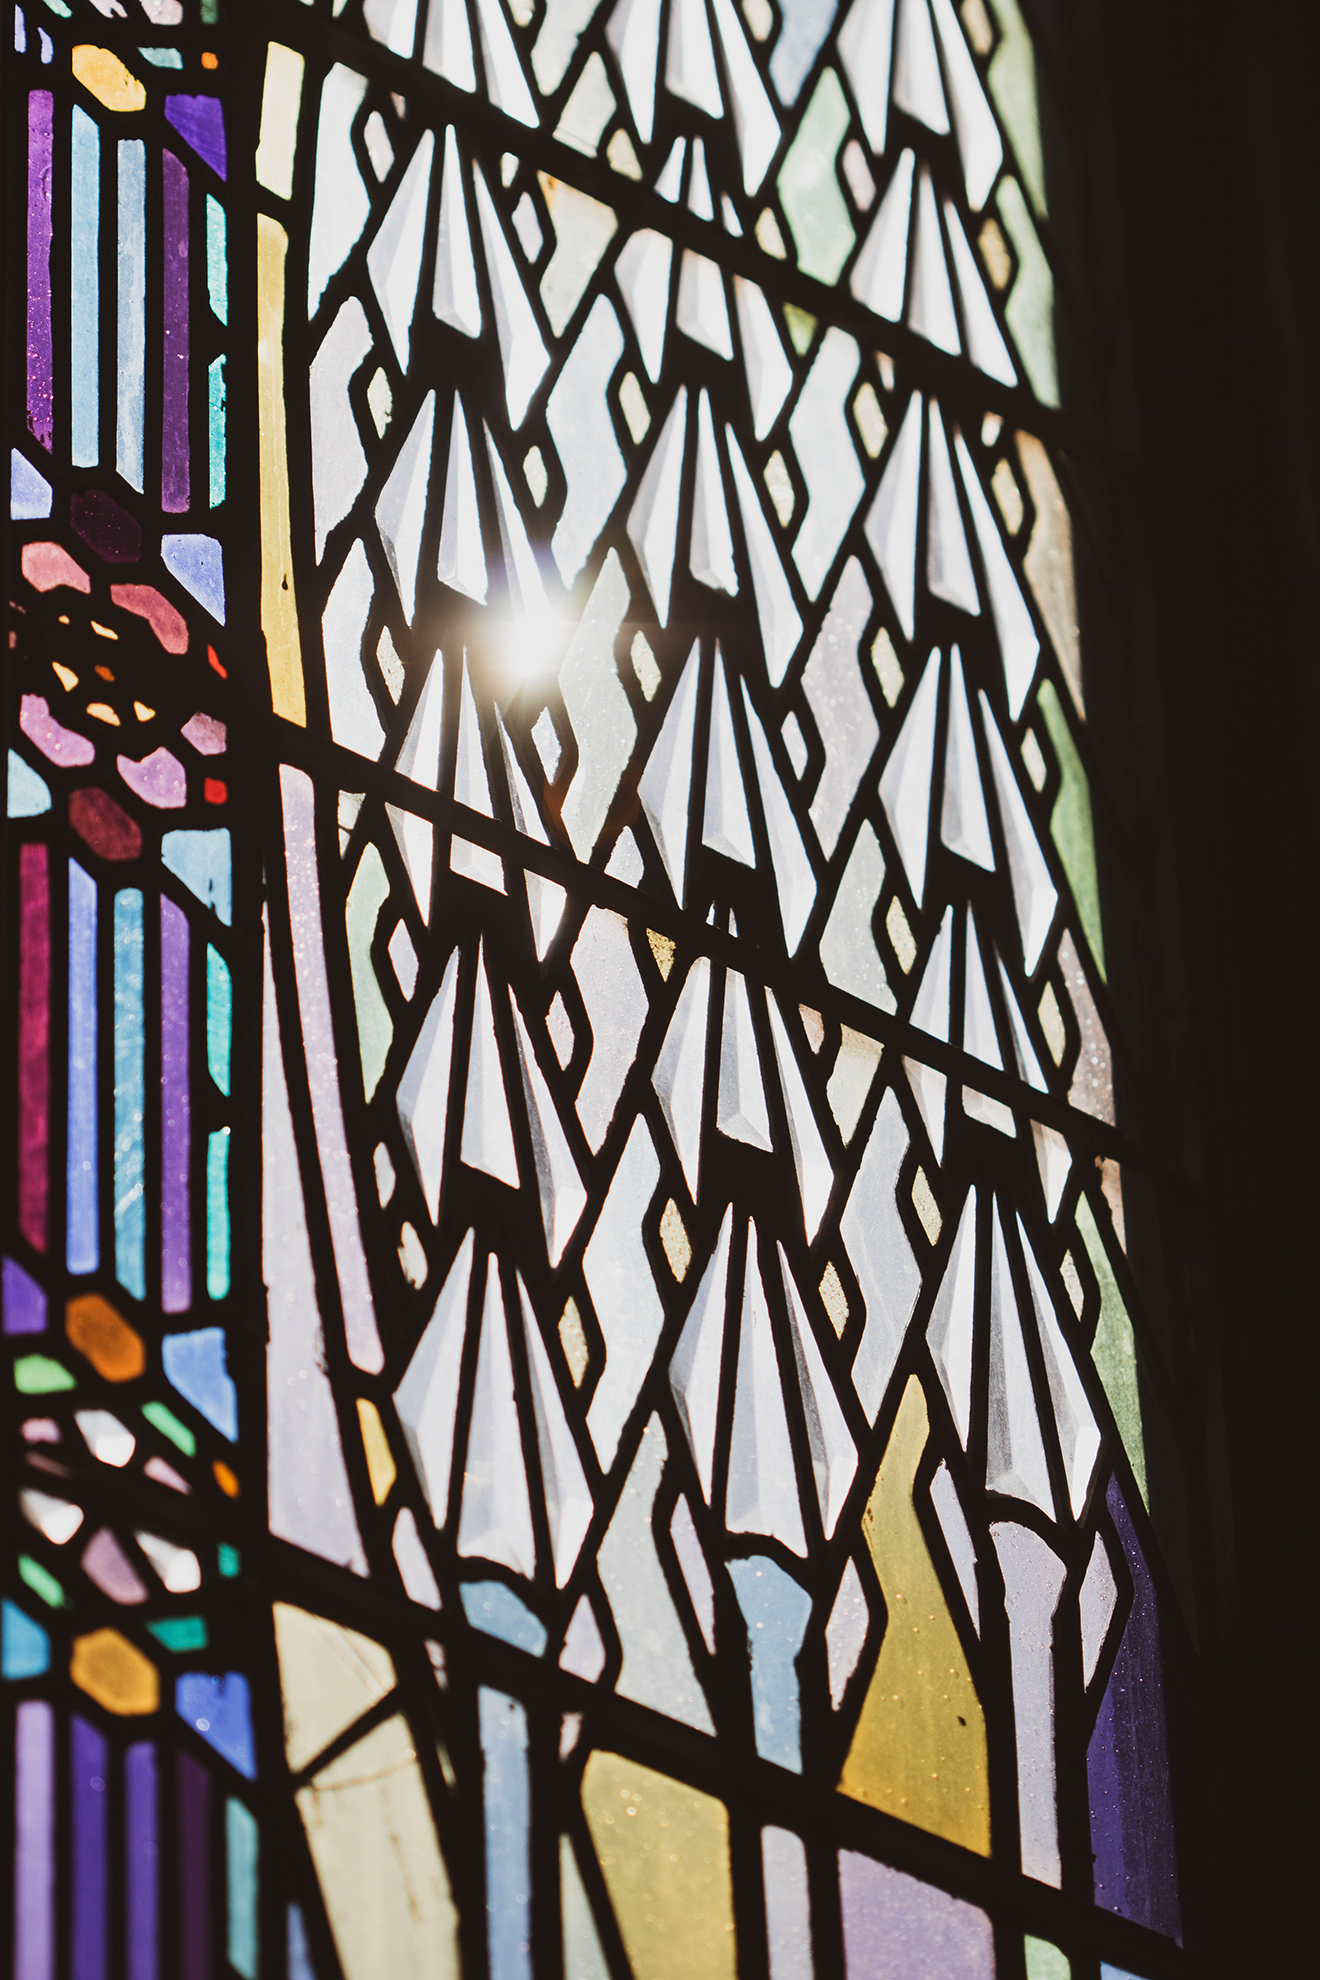 Art Deco geometric stained glass window from Boston Avenue Methodist church in Tulsa